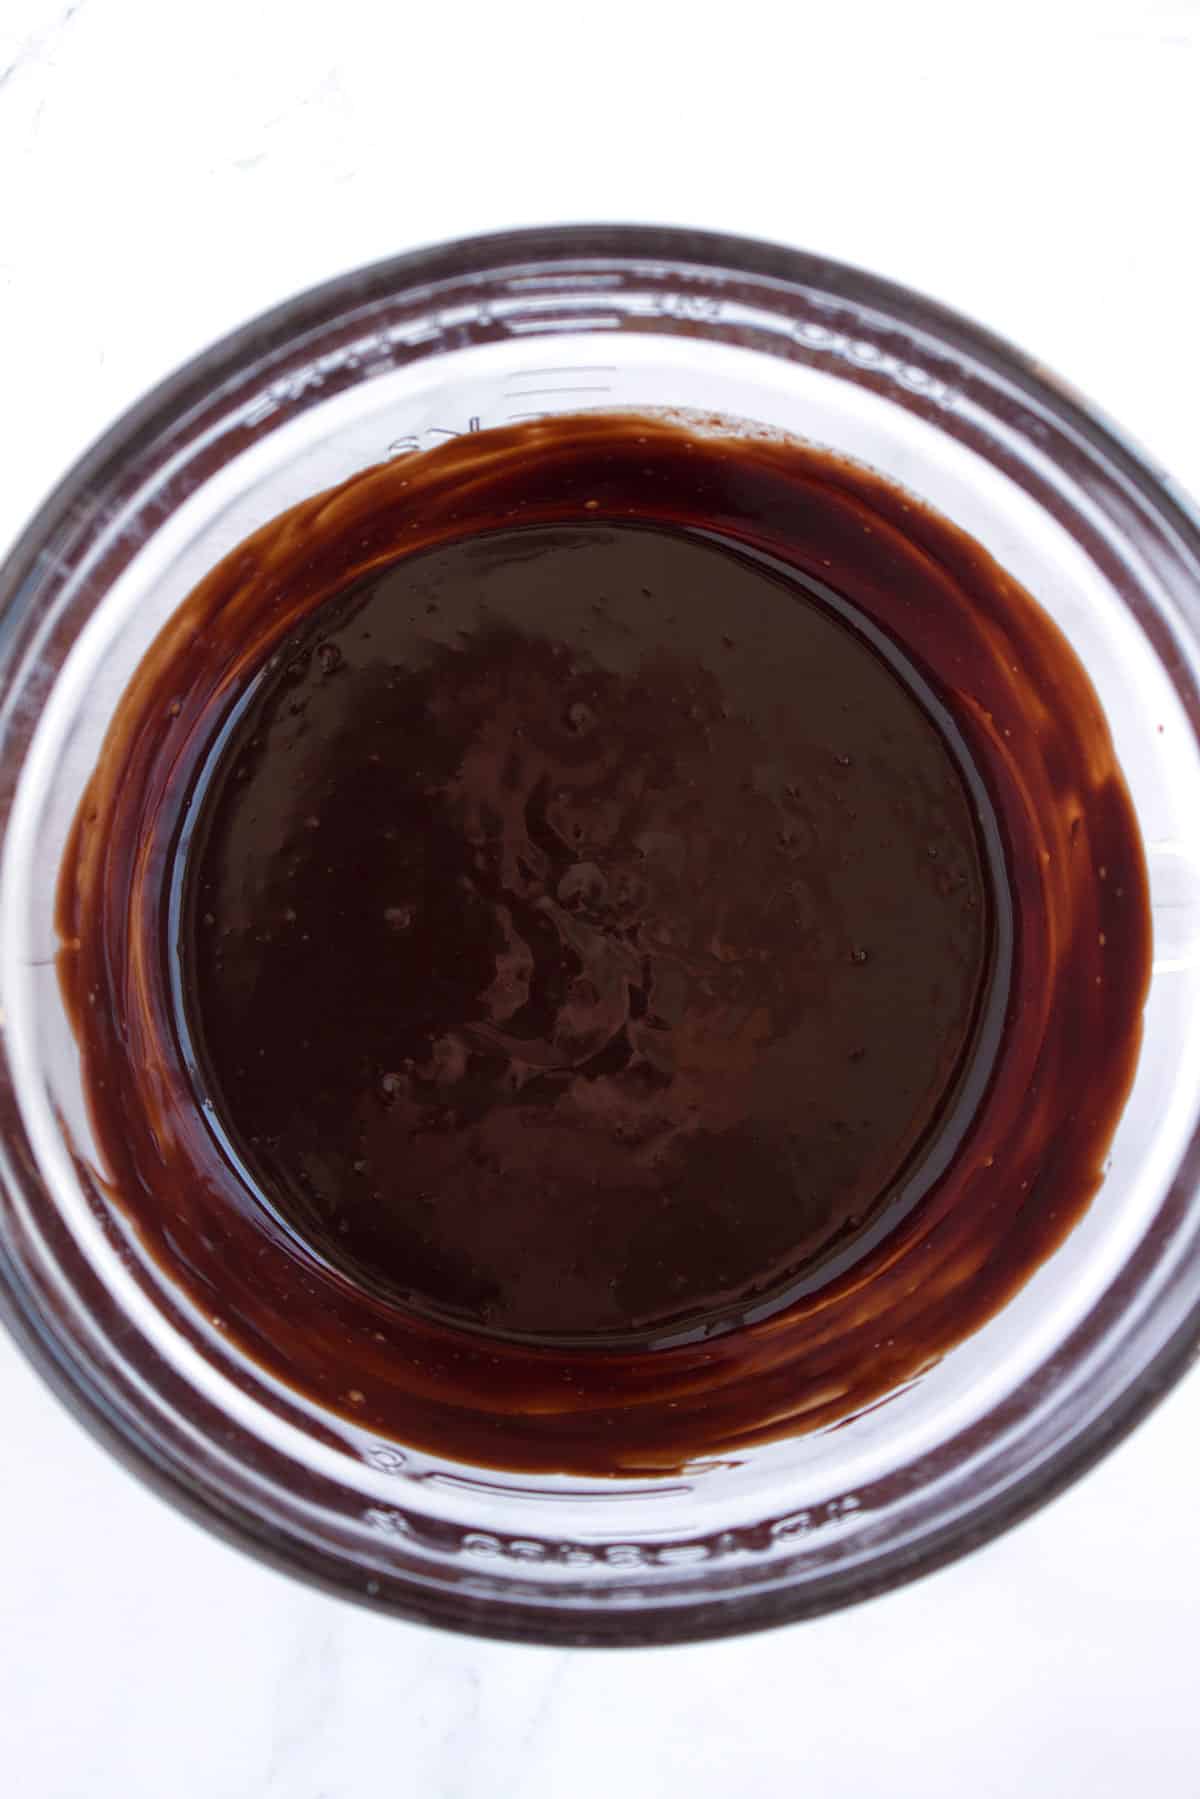 Dark chocolate ganache in a glass bowl.